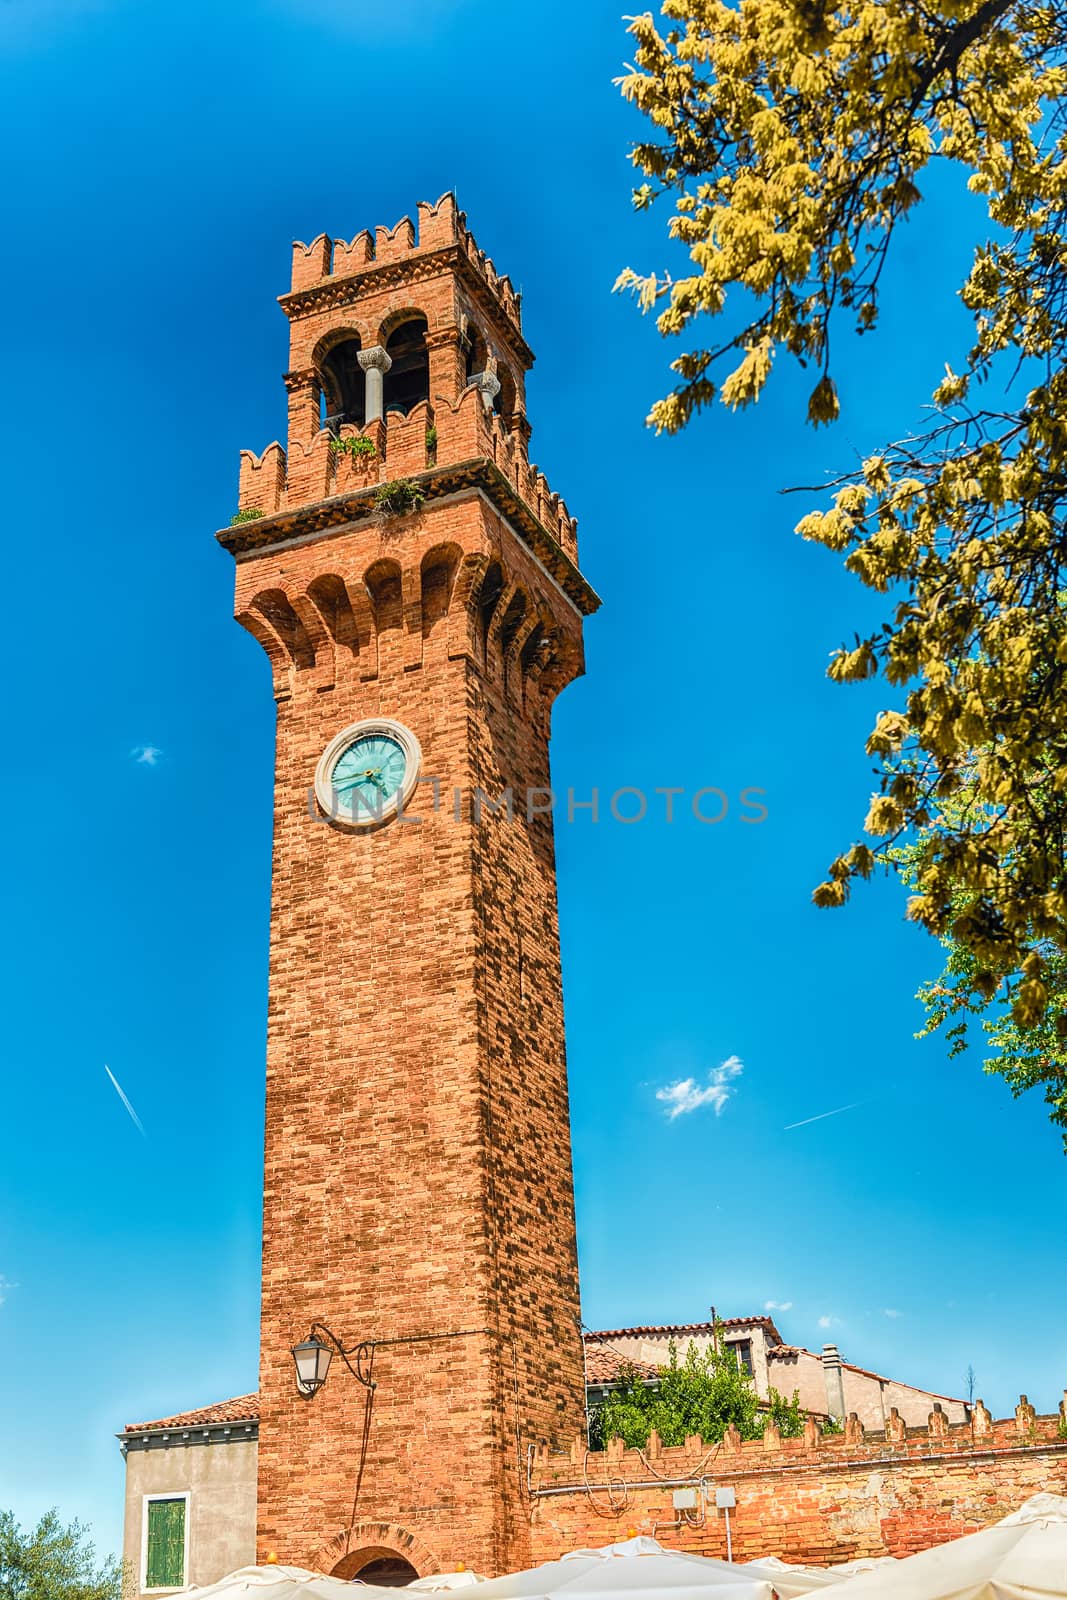 Clocktower on the island of Murano, Venice, Italy by marcorubino